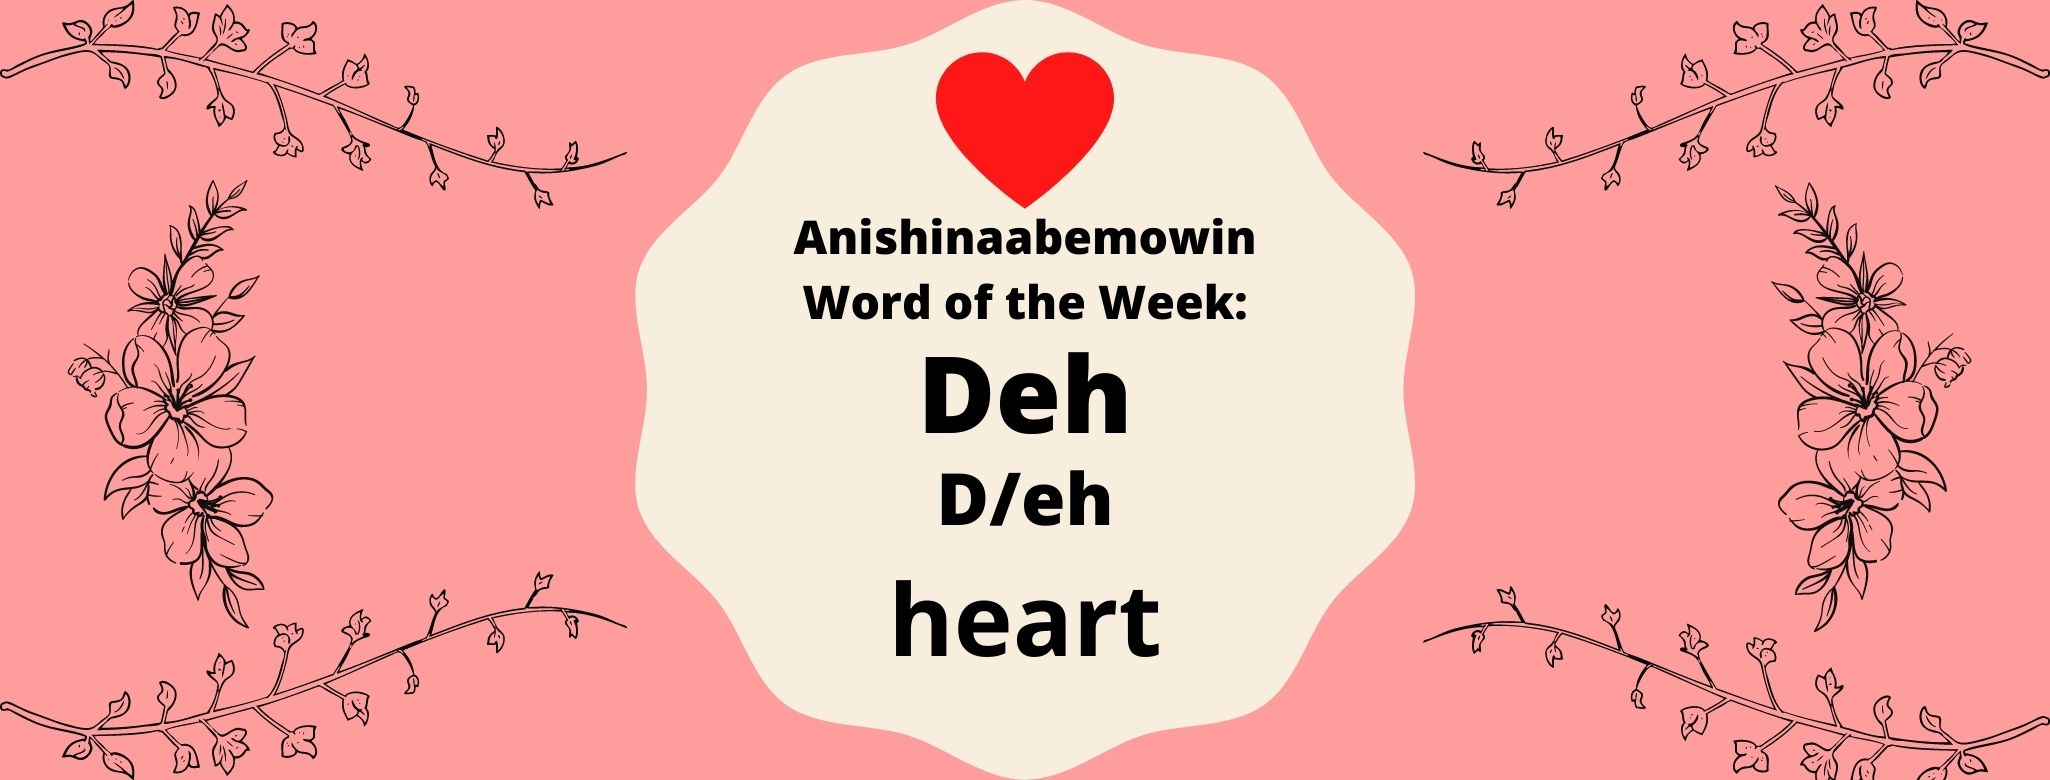 Anishinaabemowin Word of the Week Deh Deh Heart